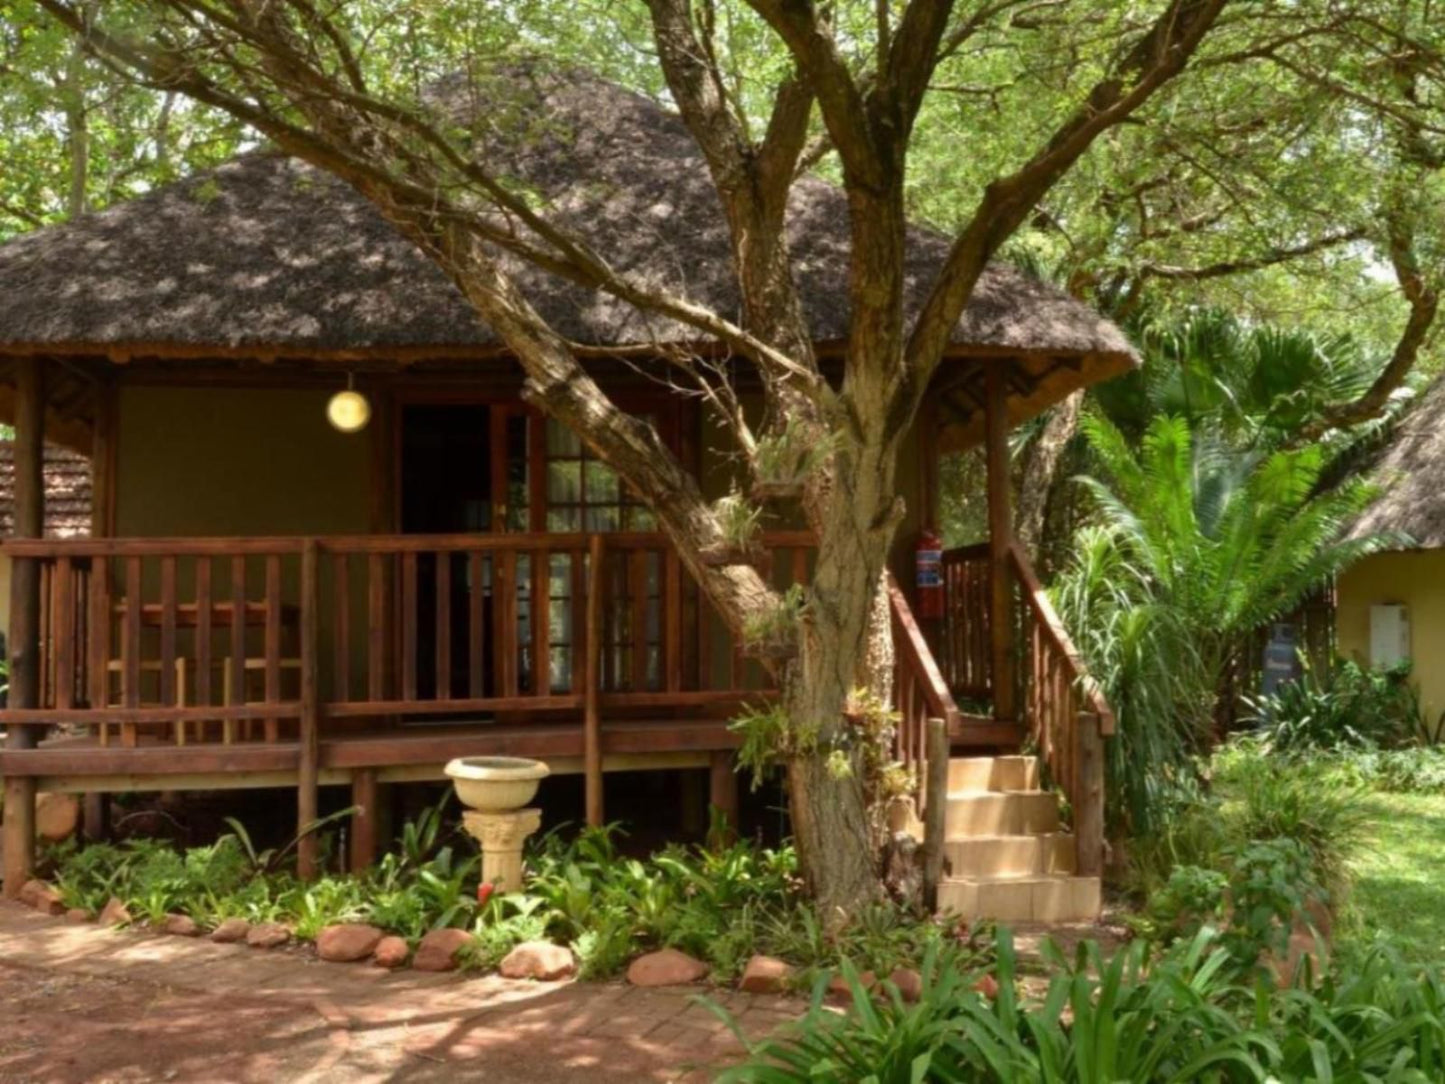 Acasia Guest Lodge Komatipoort Mpumalanga South Africa Plant, Nature